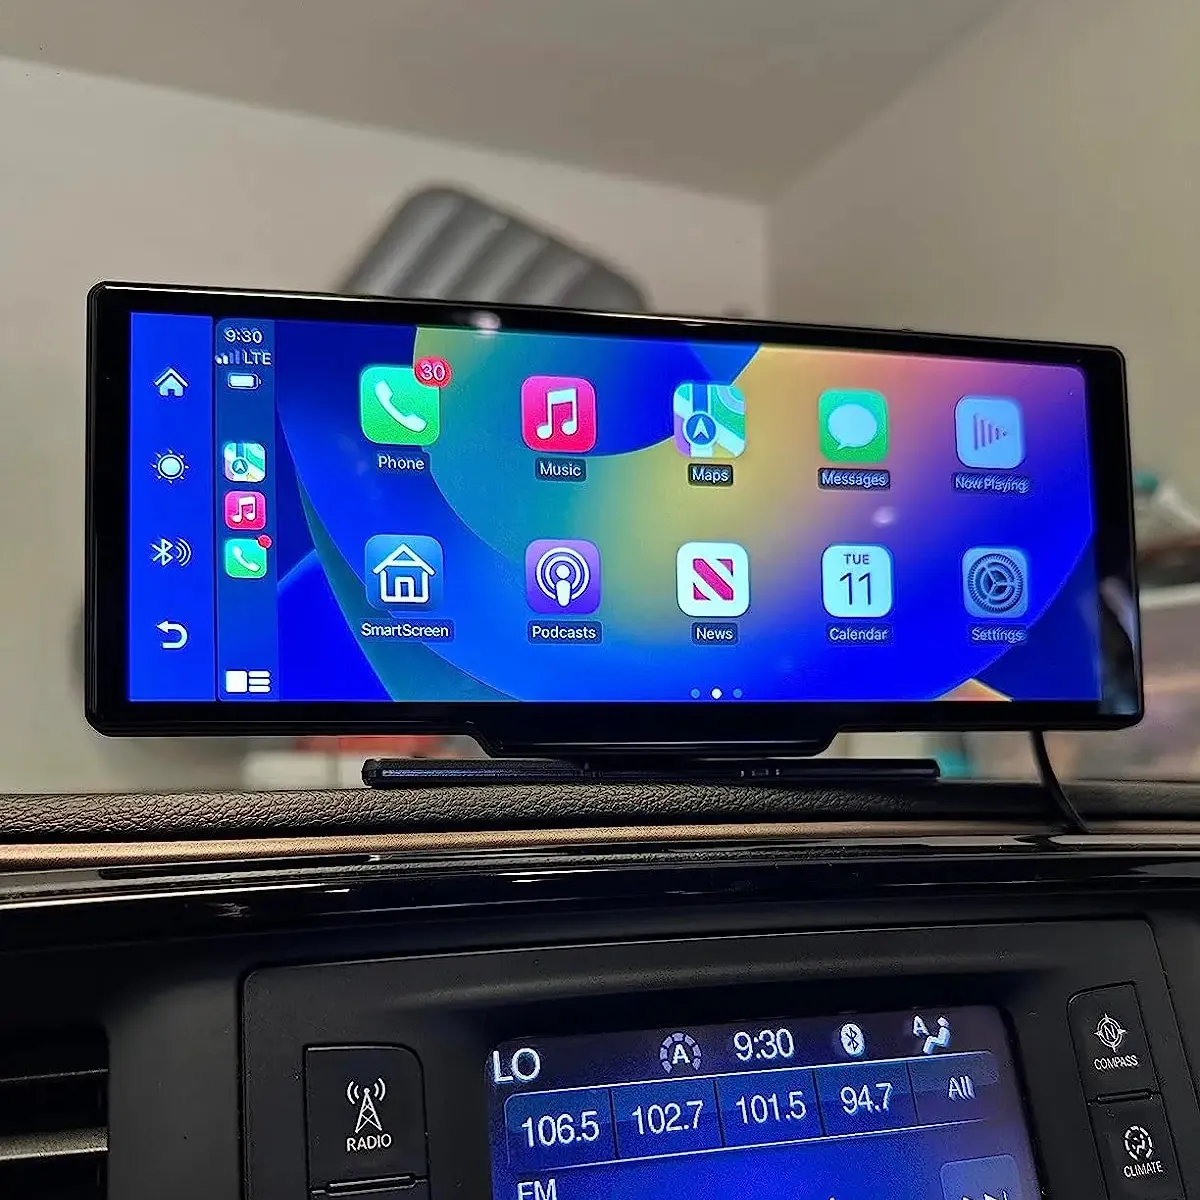 Joyeauto 10 Inch Touch Carplay Scherm Mp5 Speler Auto Play Spiegel Link Fm Tf Carplay Android Auto